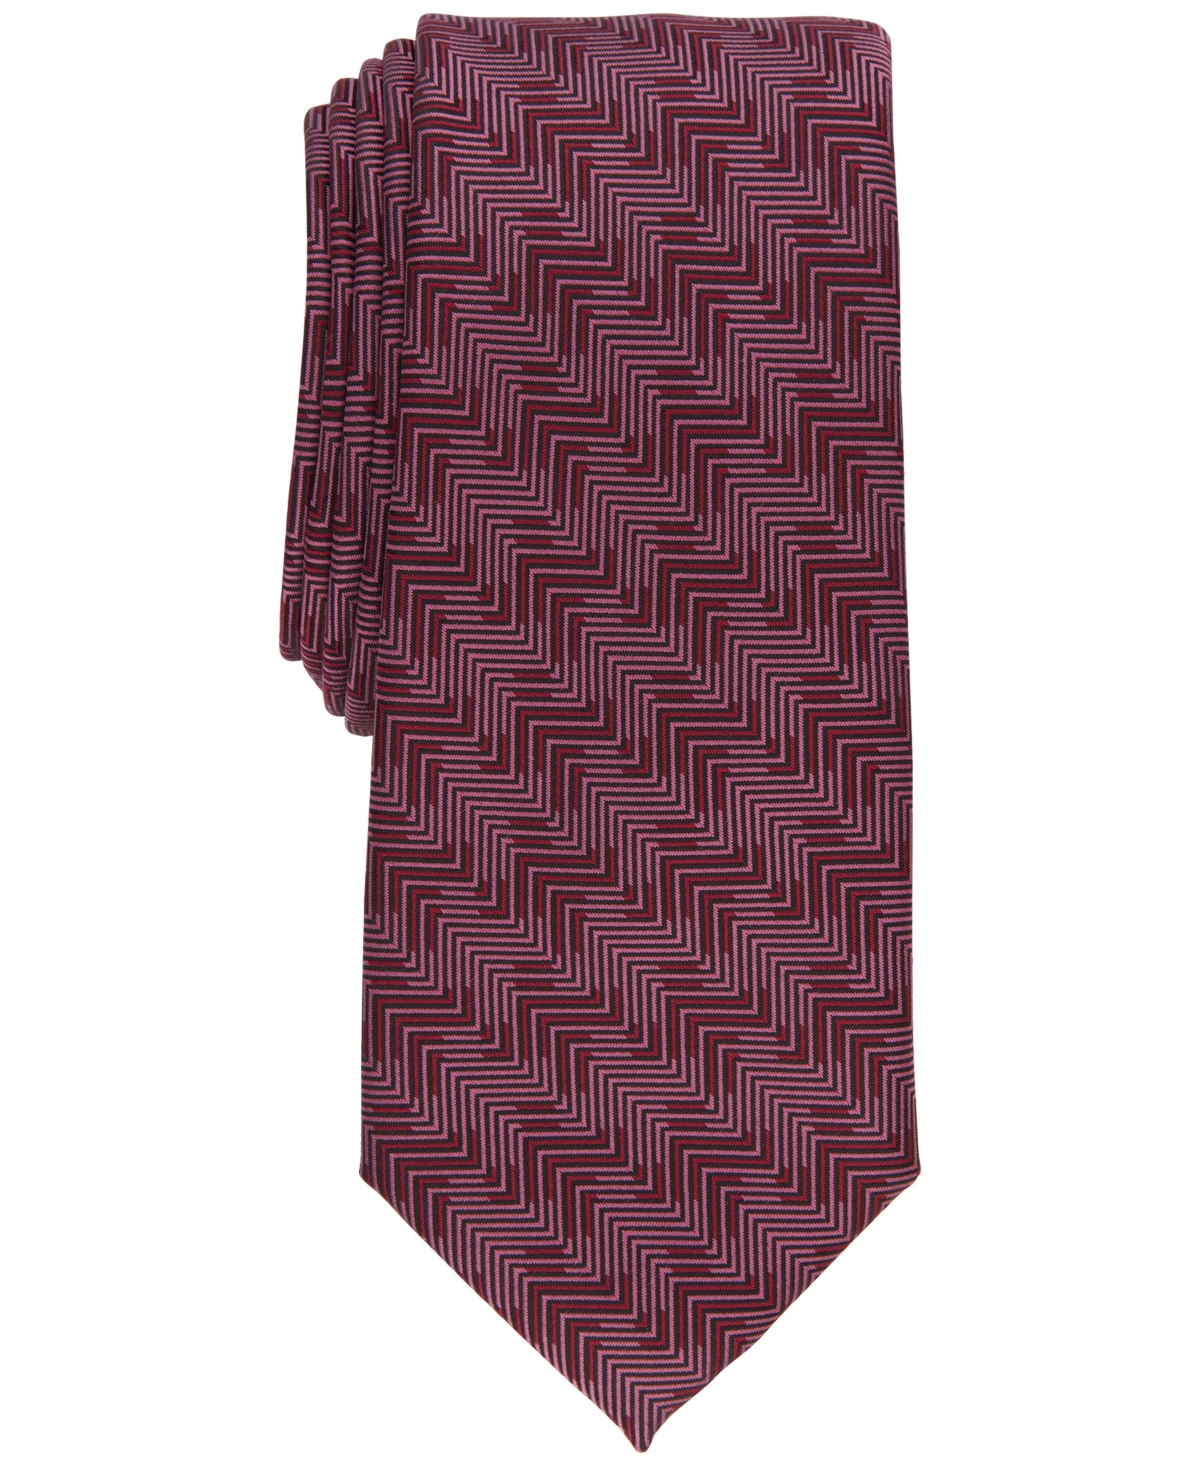 Men's Crest Geometric-Print Slim Tie, Created for Macy's - Red